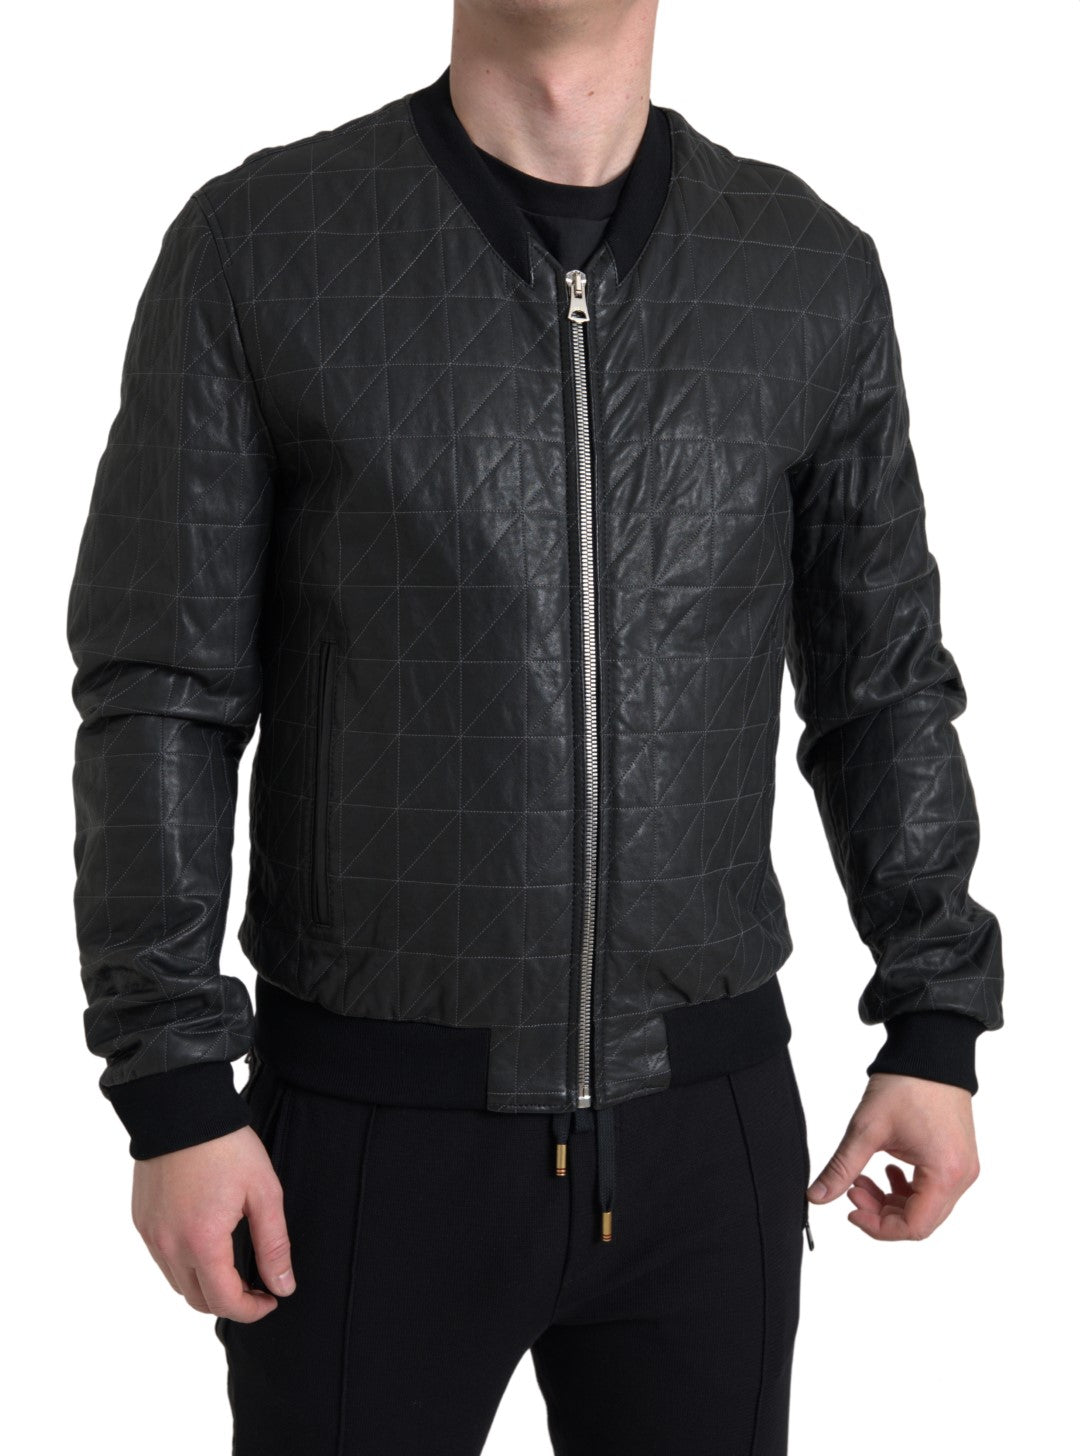 Black Leather Full Zip Bomber Coat Jacket